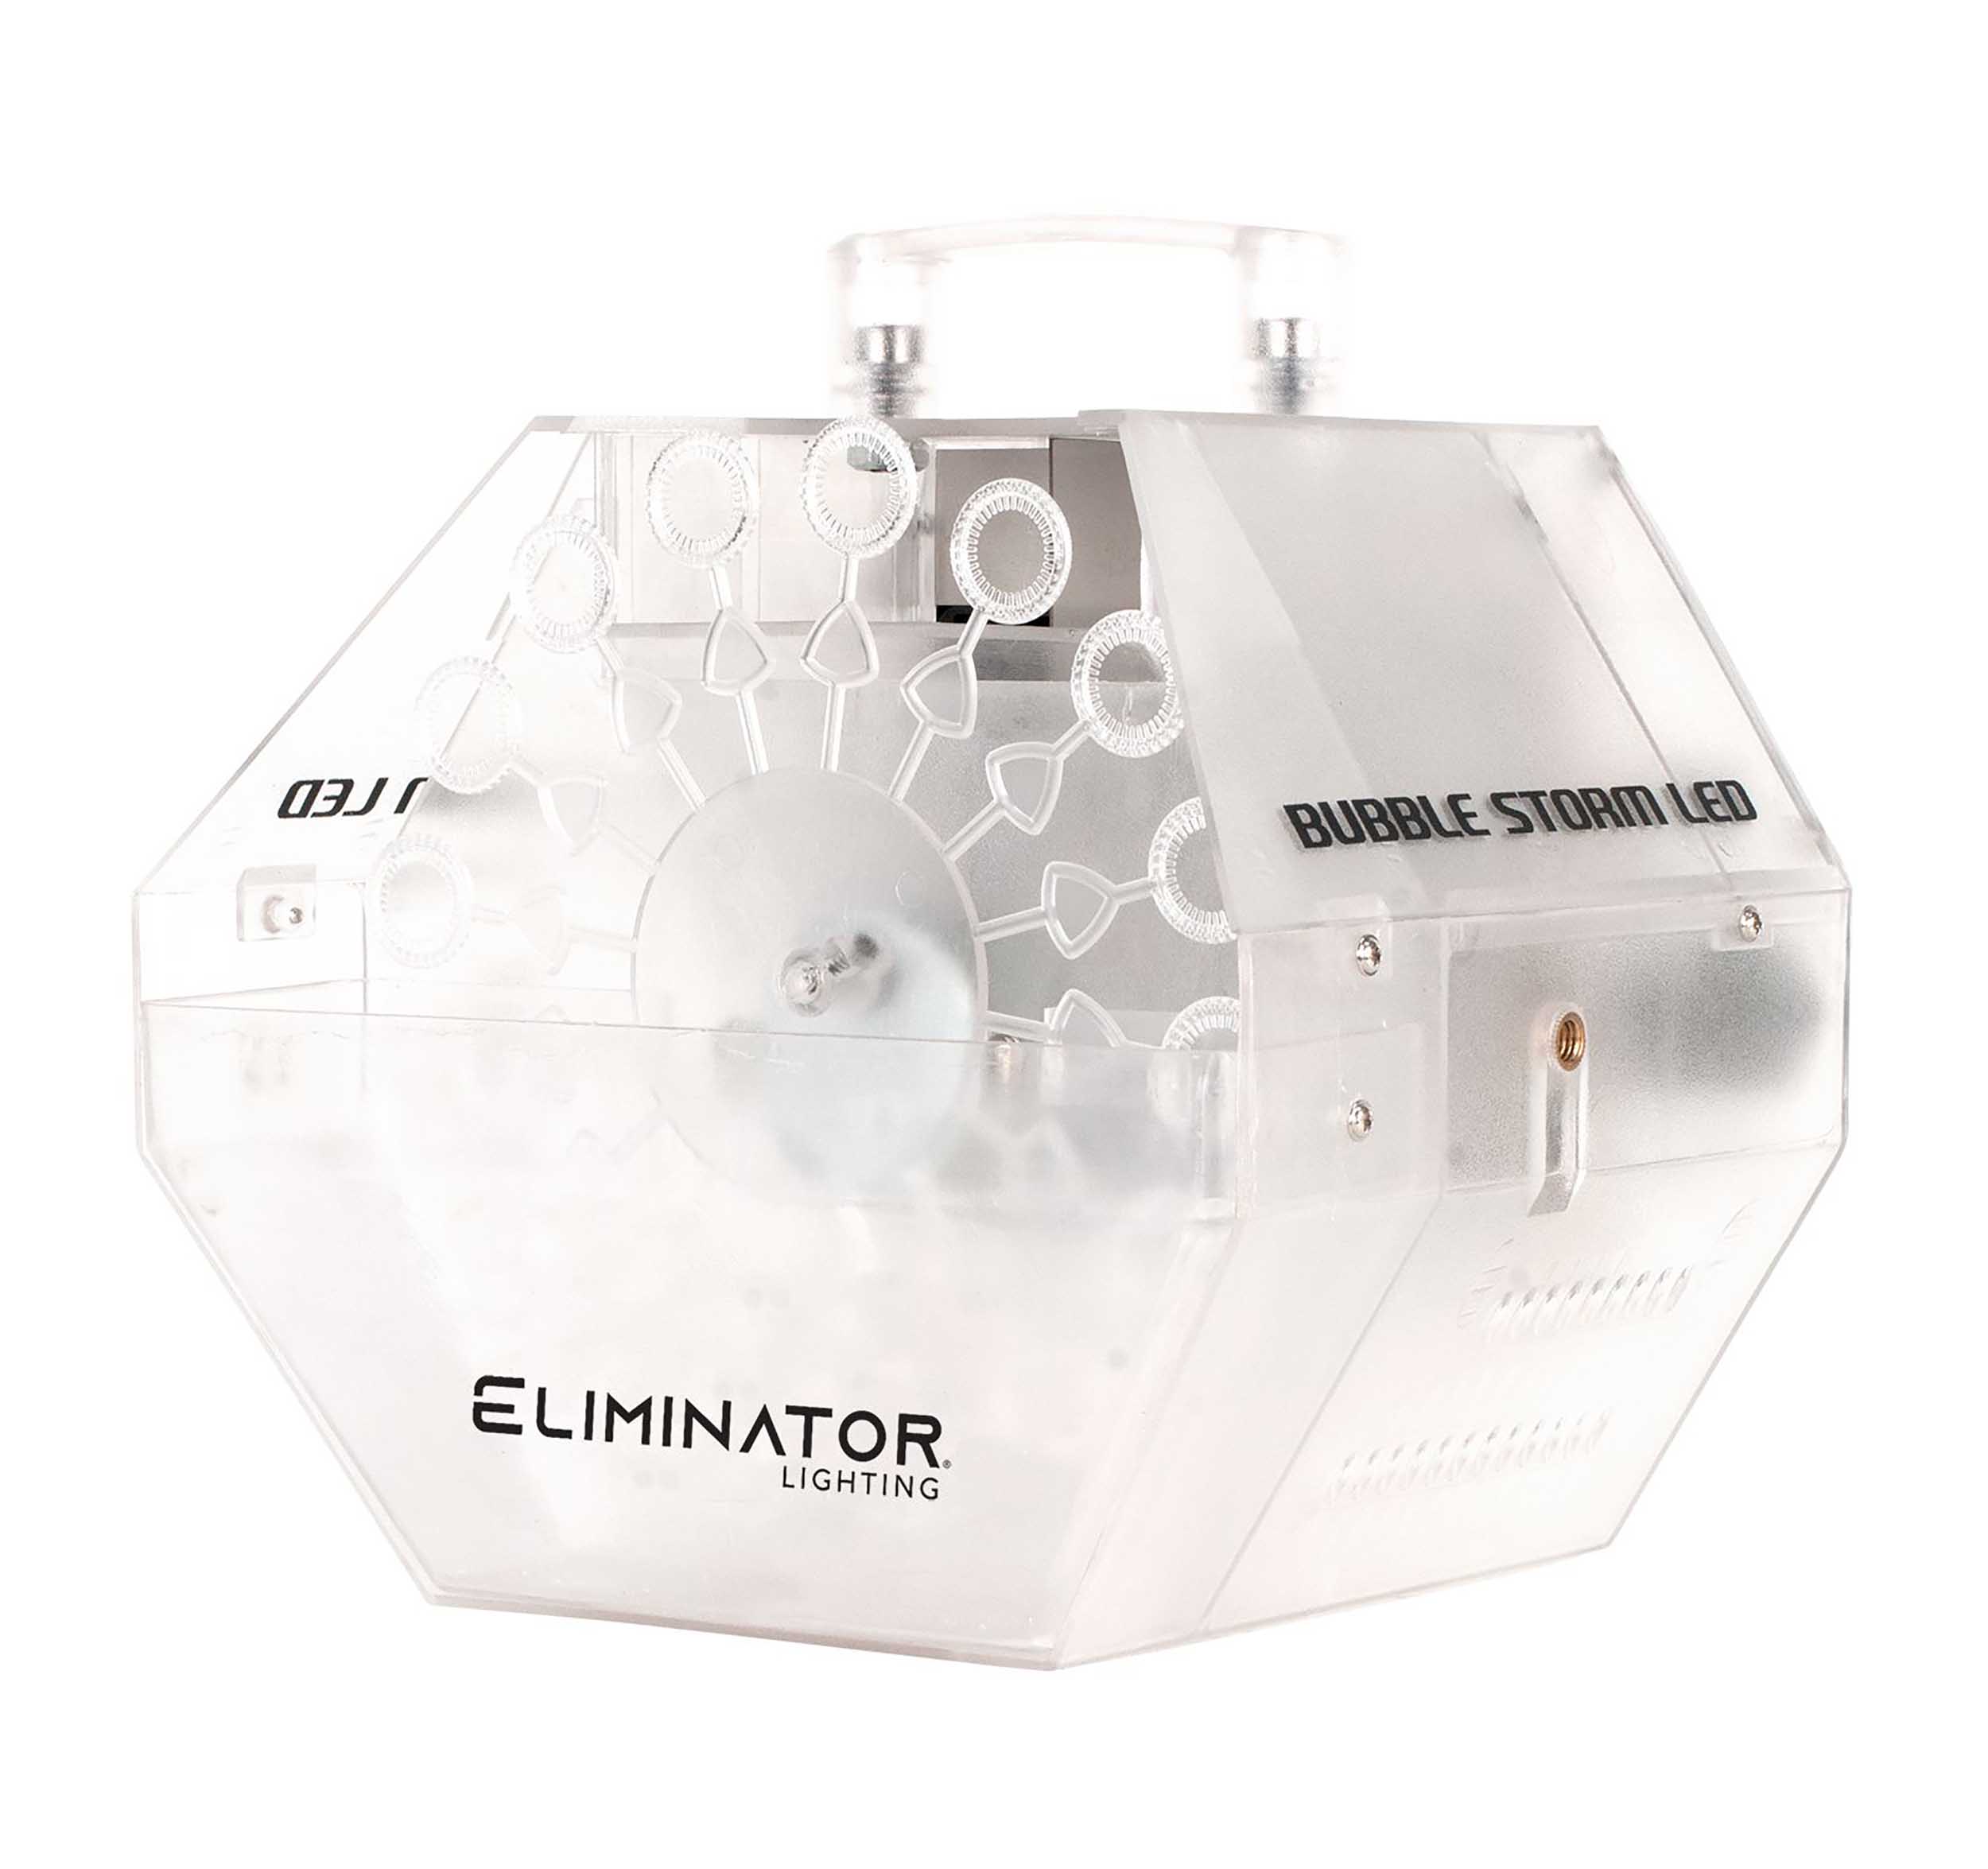 Eliminator Lighting Bubble Storm LED Bubble Effects Machine - White by Eliminator Lighting